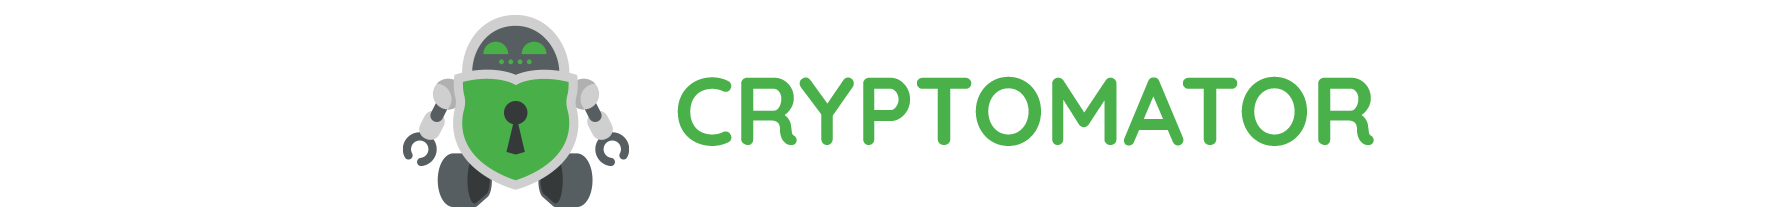 cryptomator